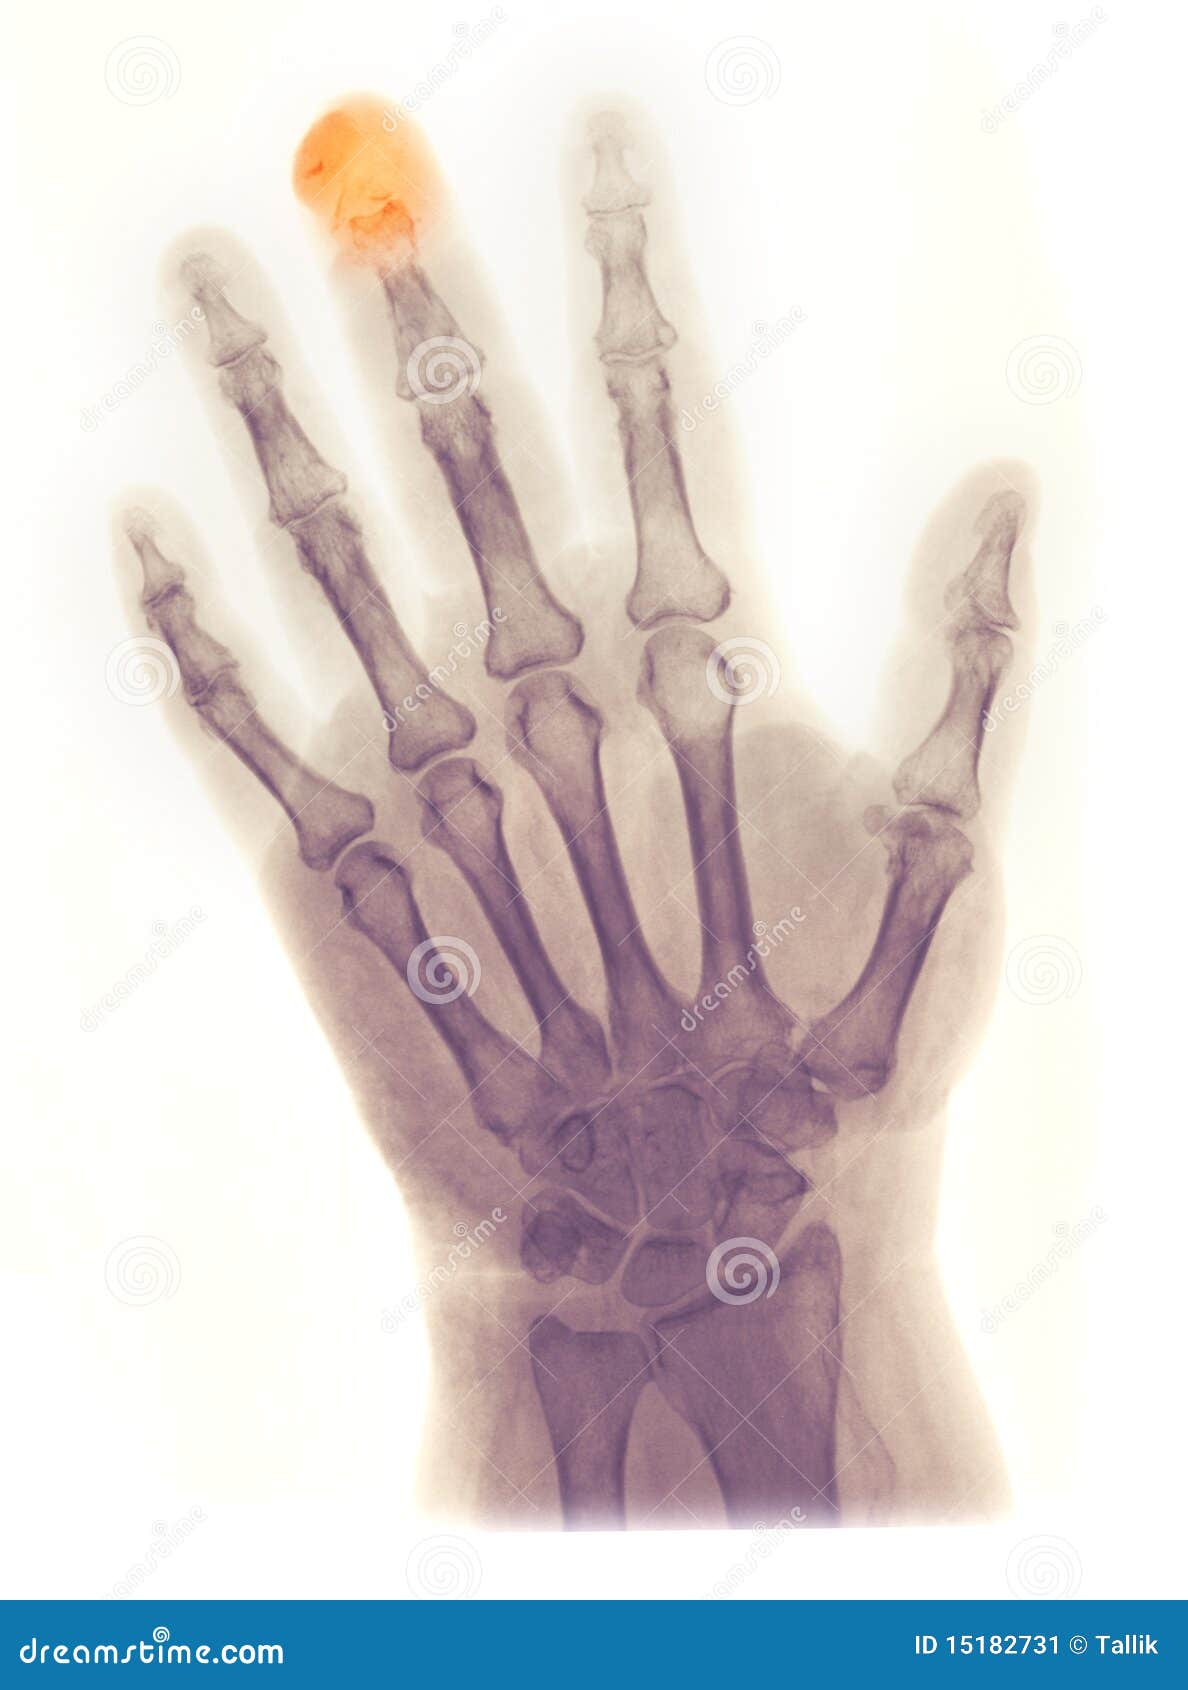 hand x-ray, fractured/amputated distal phalanx